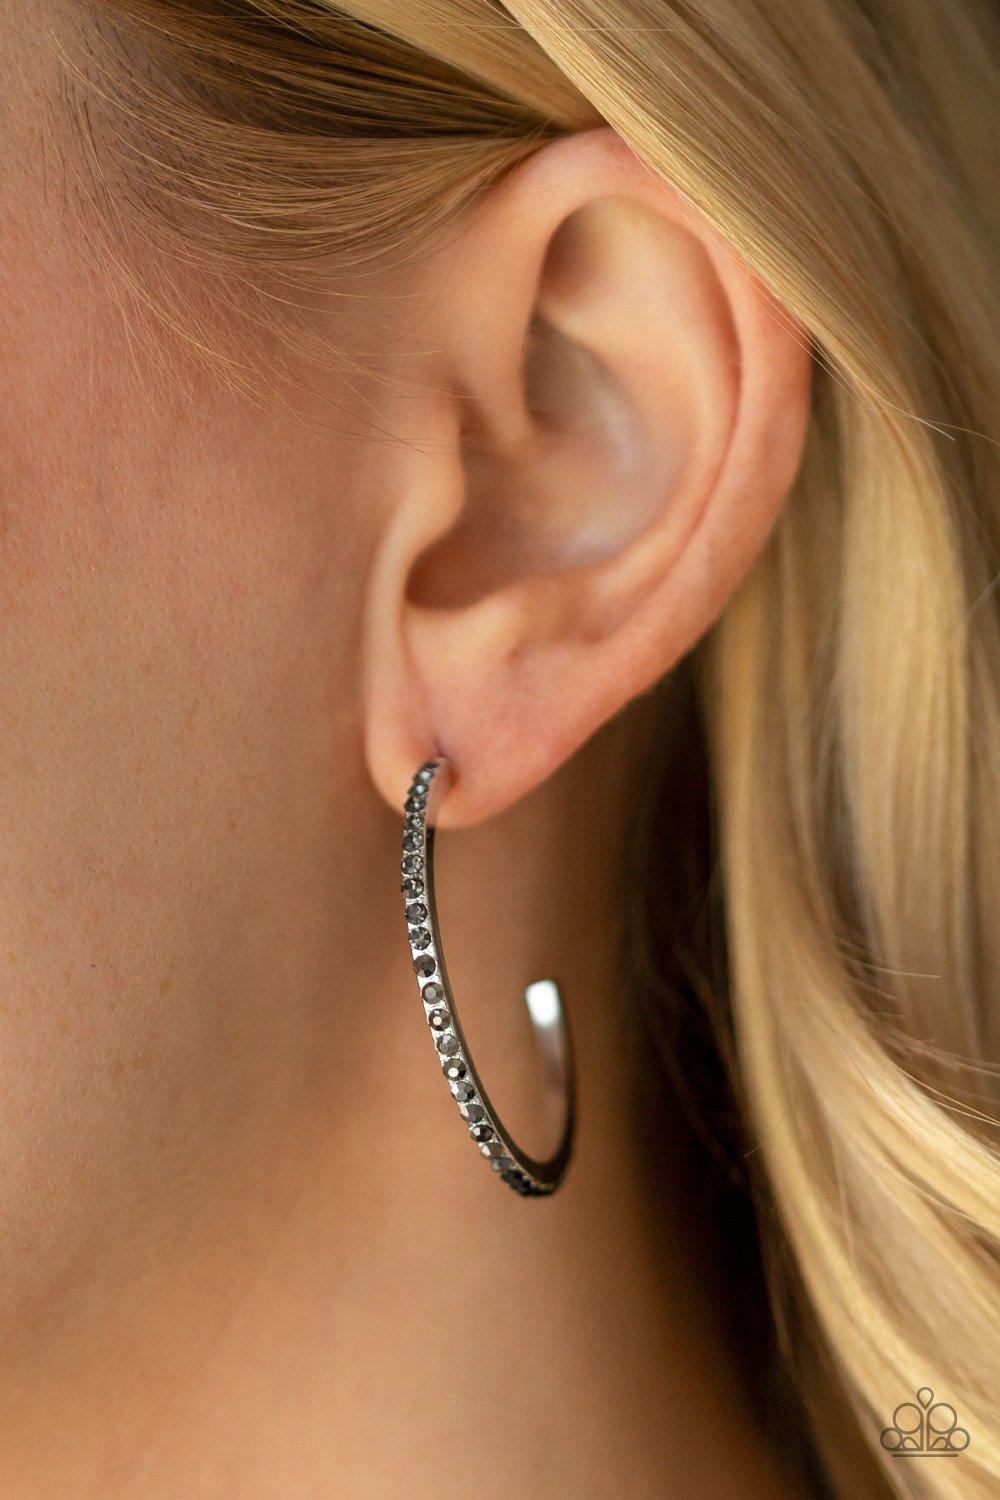 Rhinestone Revamp Black Earrings - Jewelry by Bretta